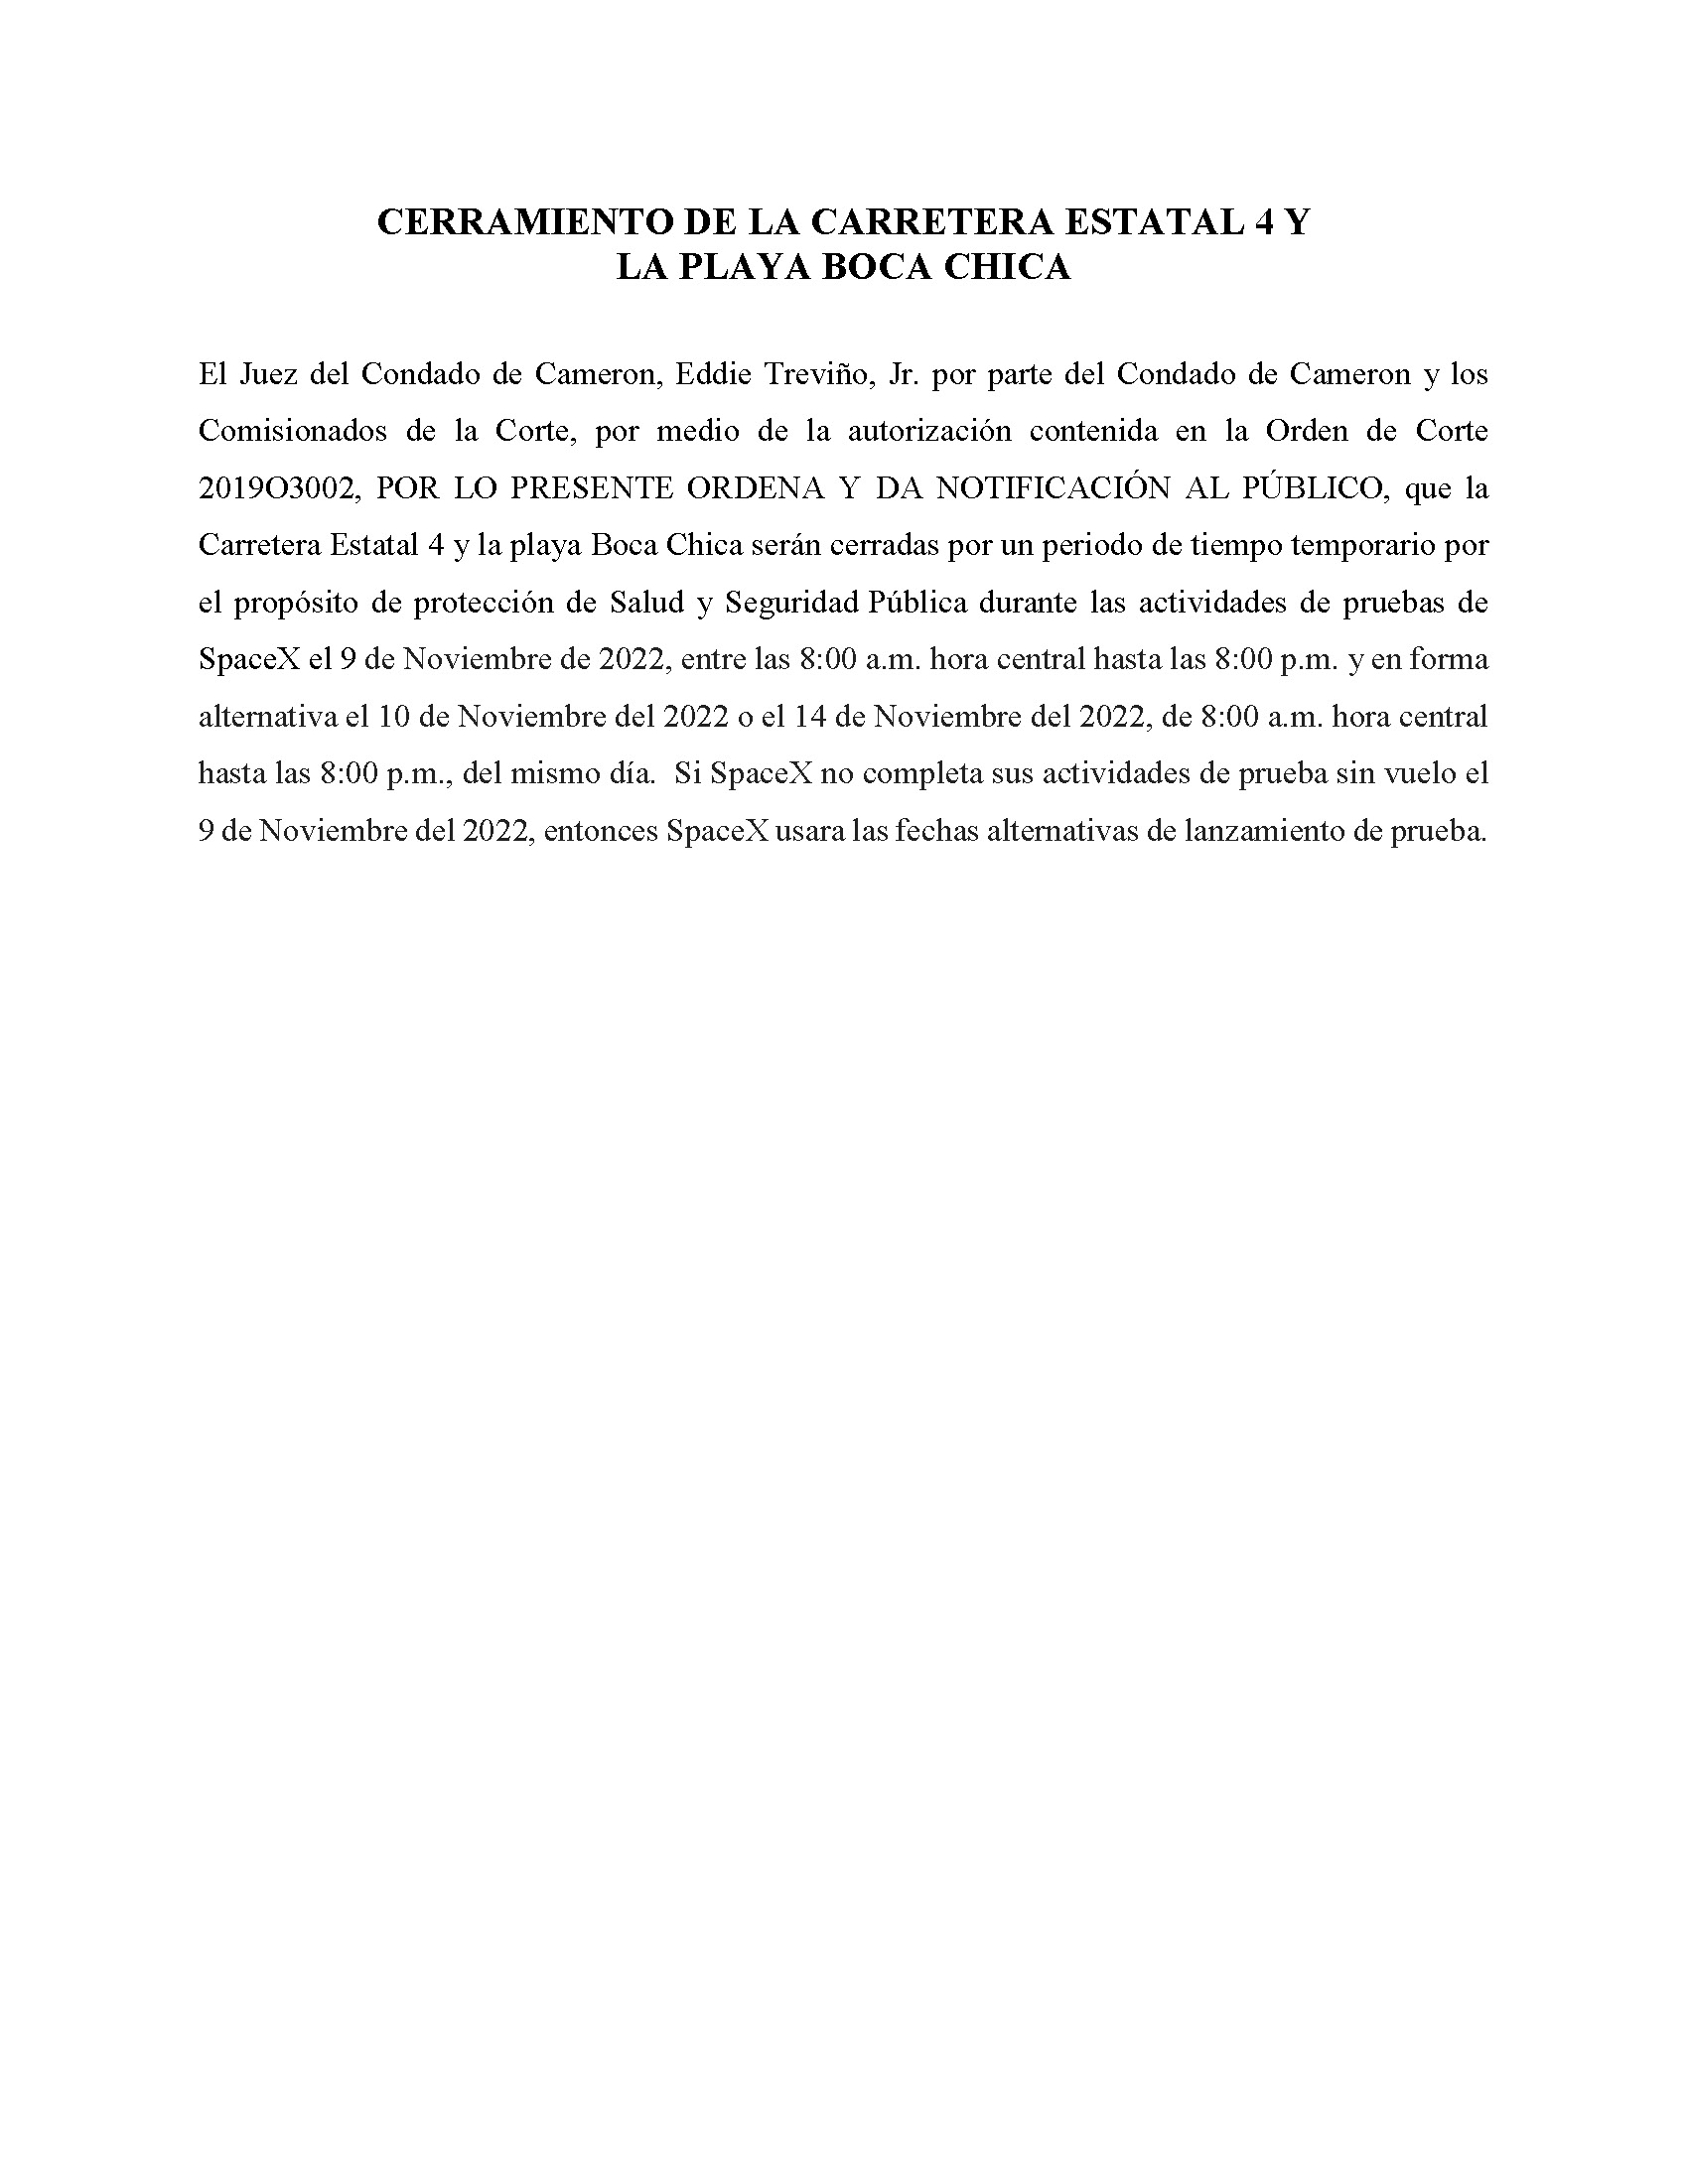 ORDER.CLOSURE OF HIGHWAY 4 Y LA PLAYA BOCA CHICA.SPANISH.11.09.2022